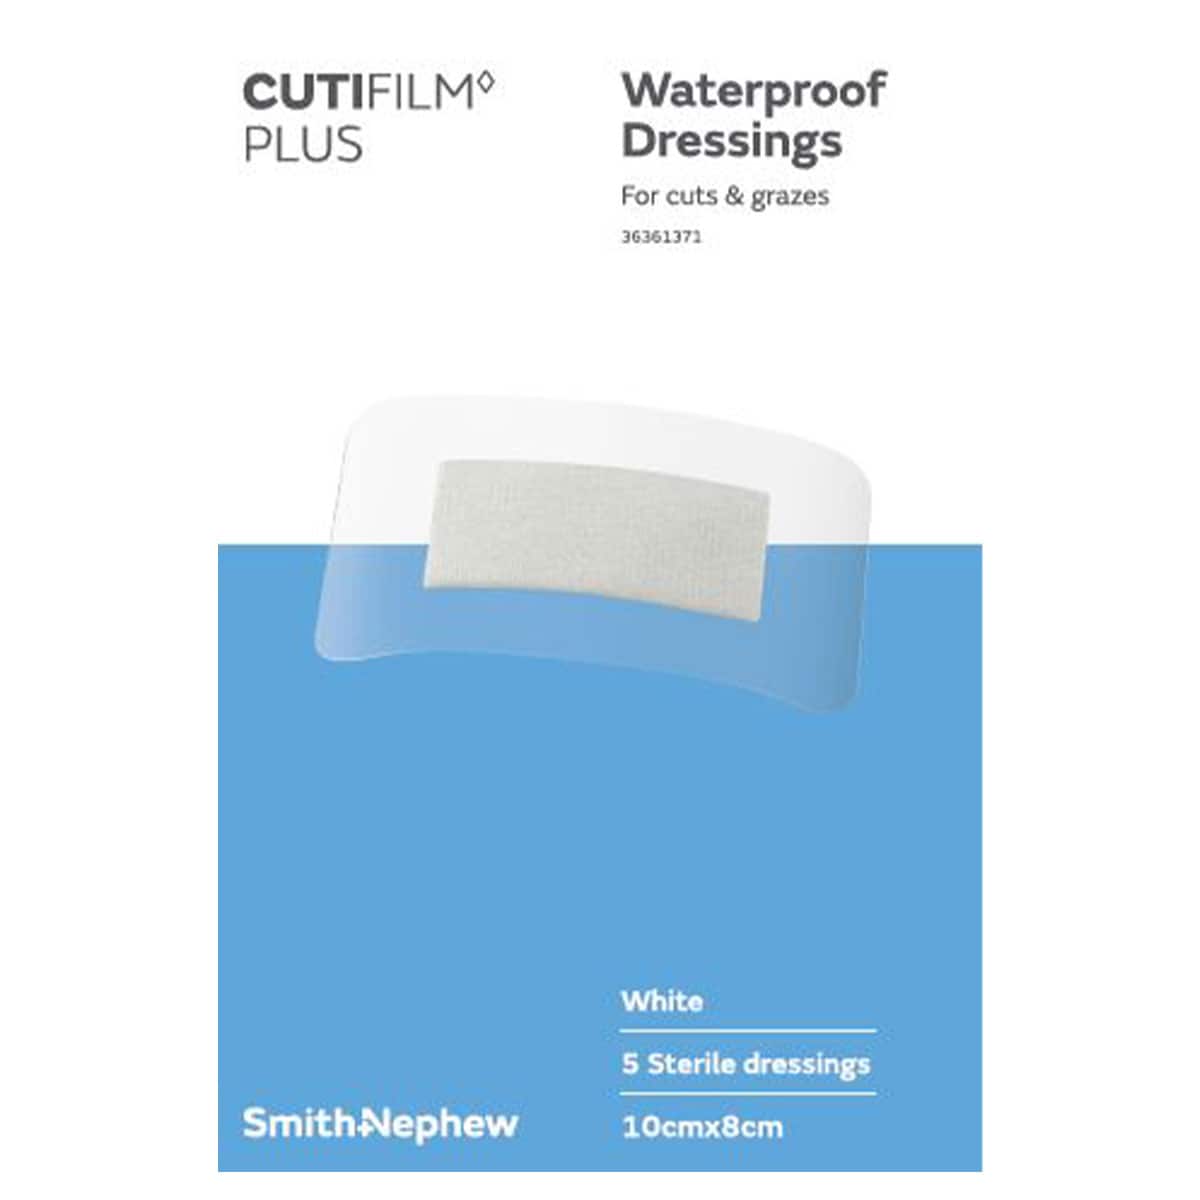 Cutifilm Plus Waterproof Dressing White 8cm x 10cm 5 Pack by Smith & Nephew